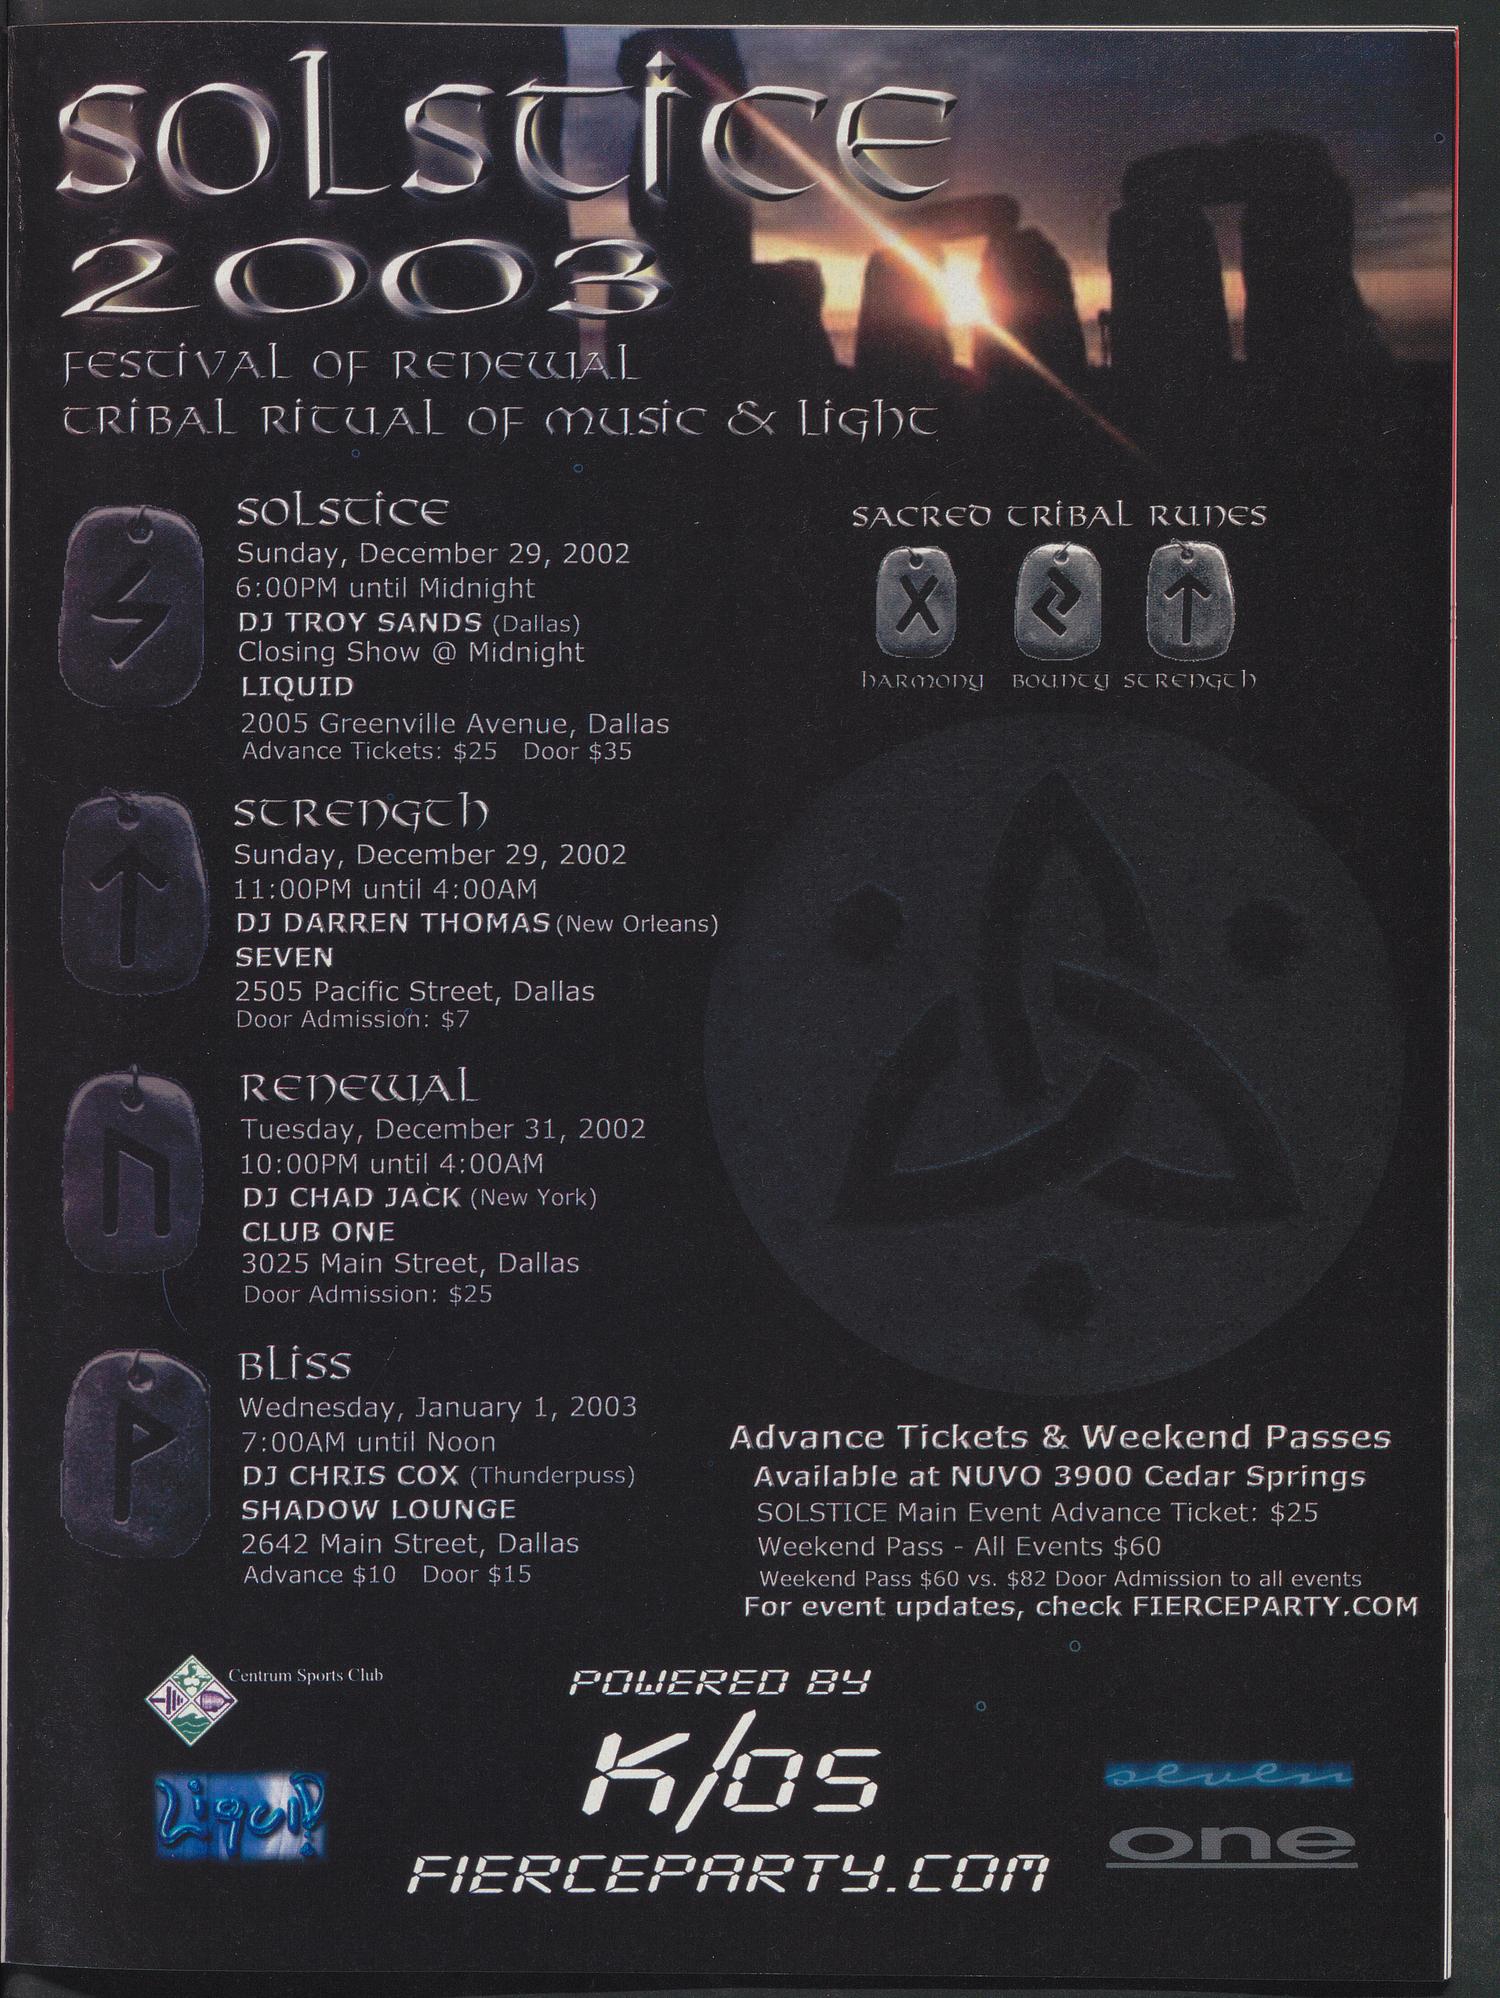 Qtexas, Volume 3, Issue 14, December 20, 2002
                                                
                                                    23
                                                